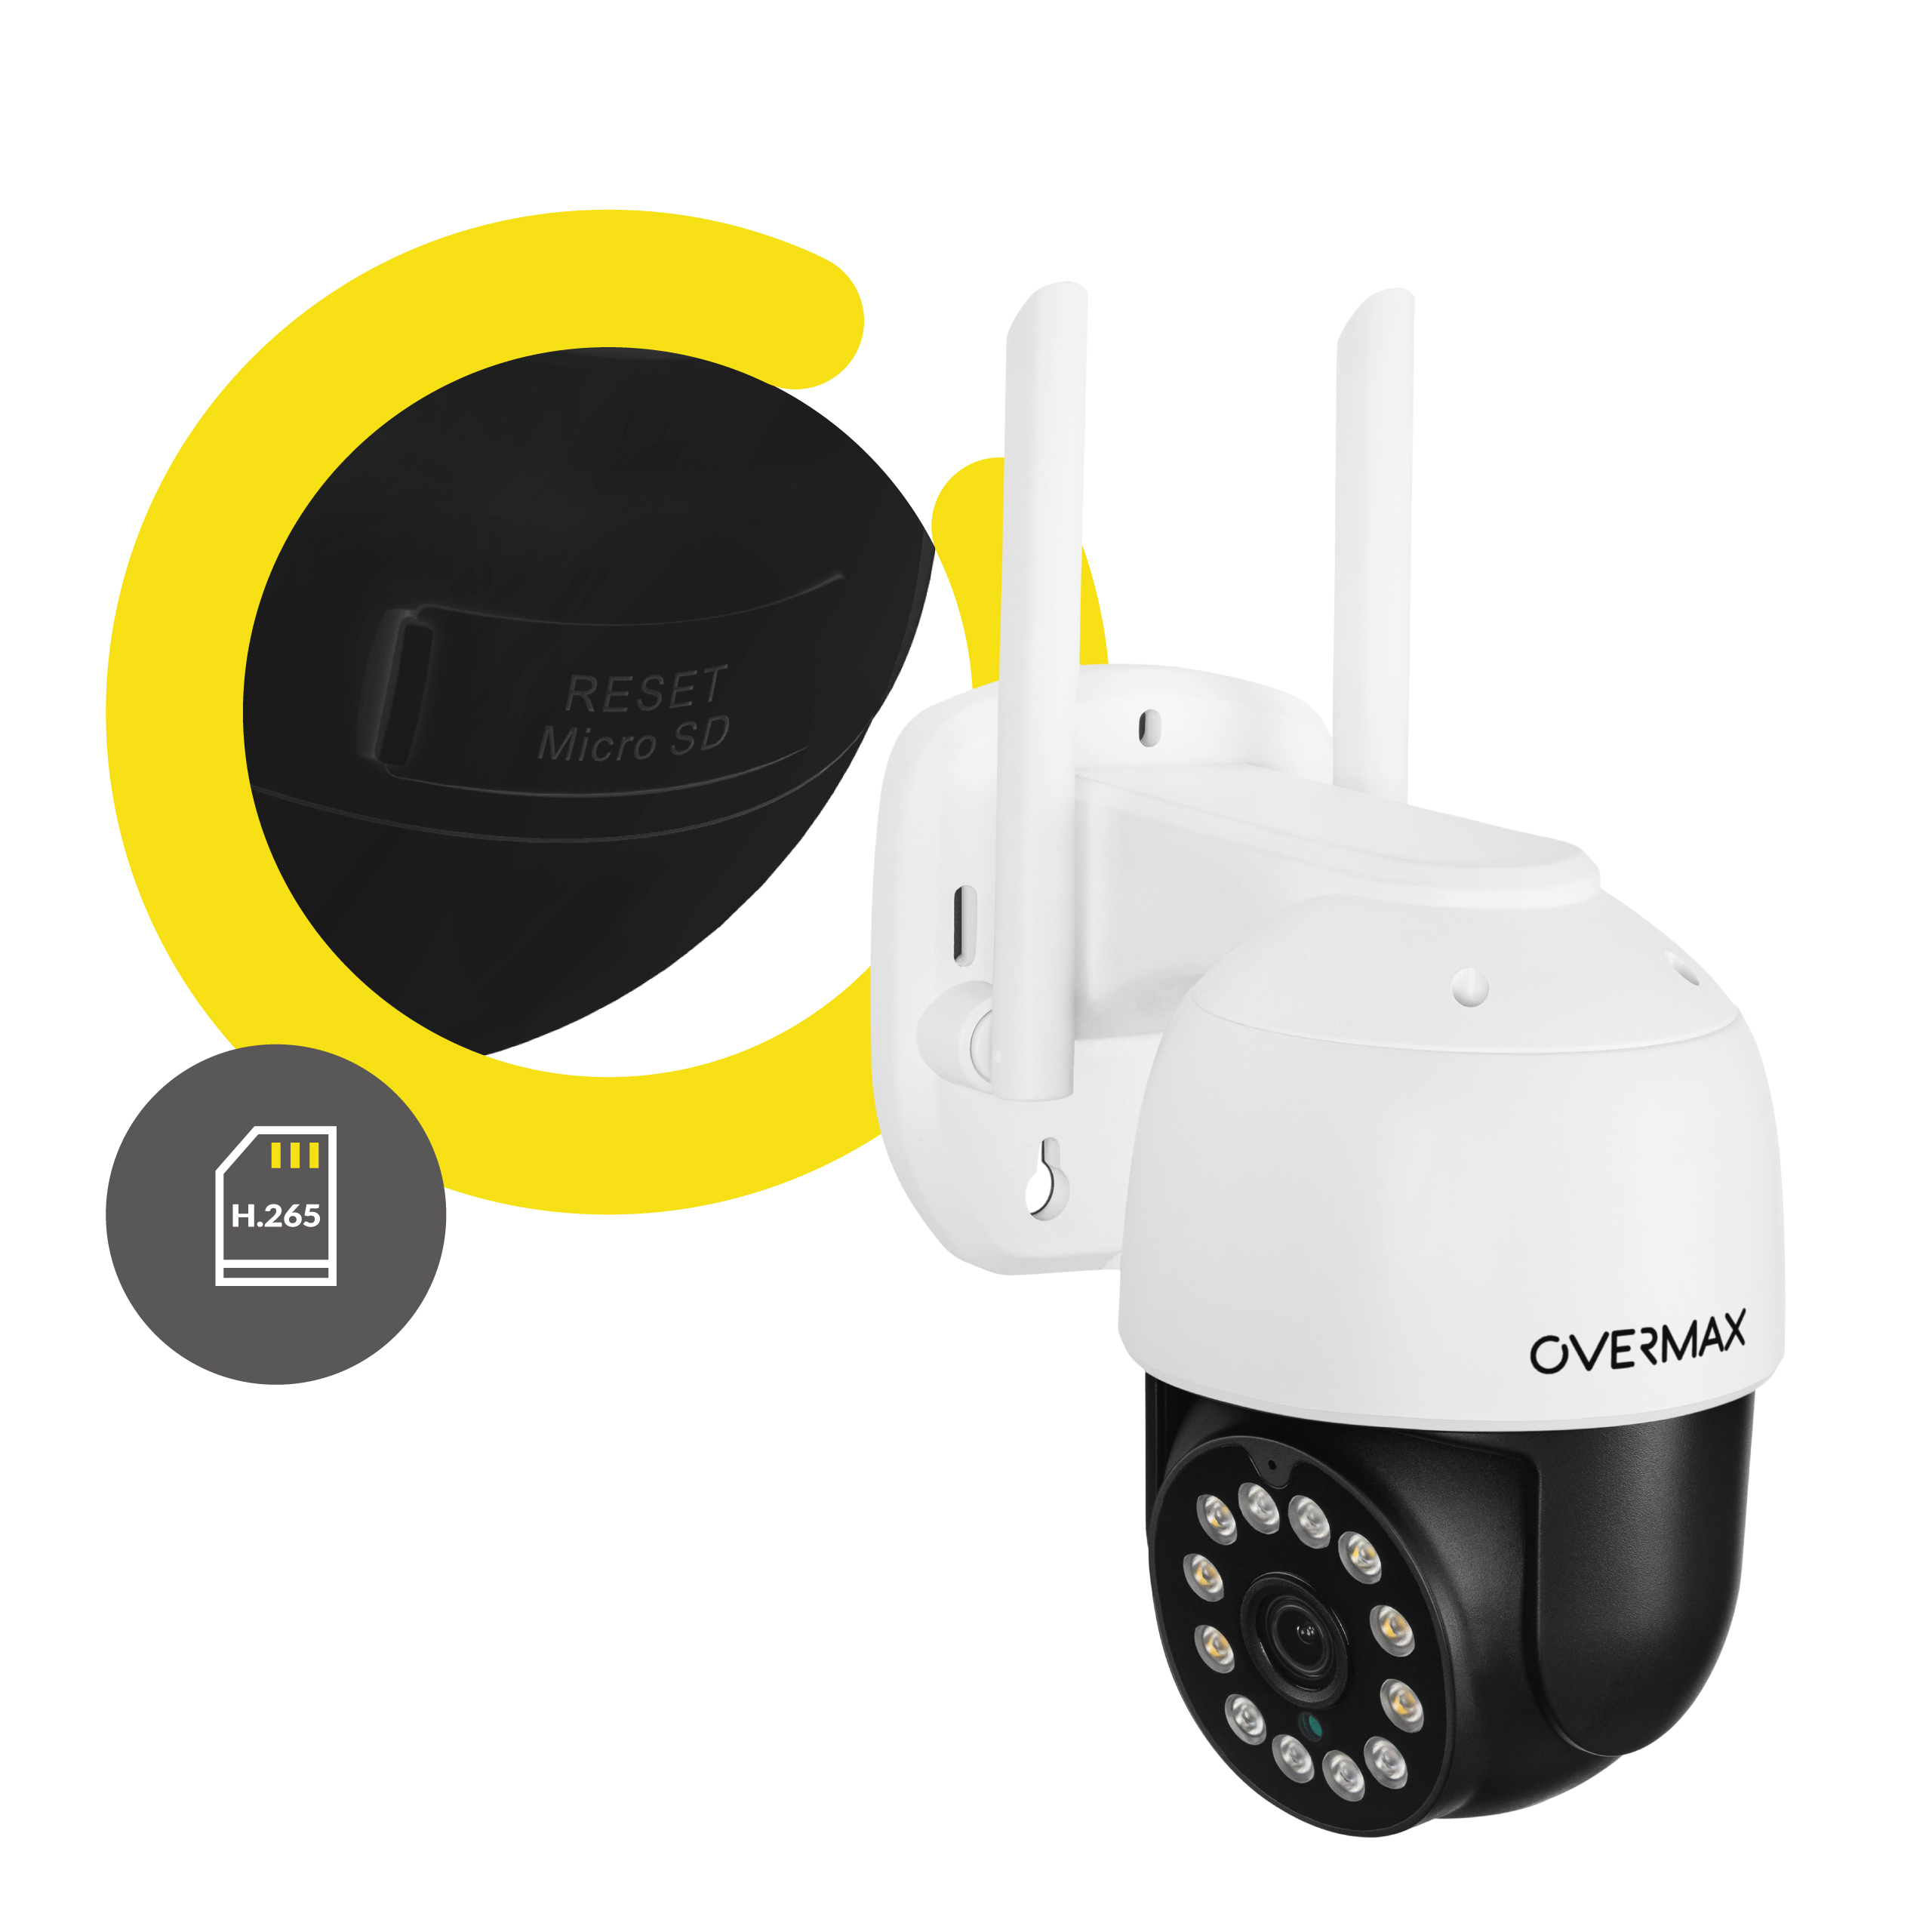 OVERMAX CAMSPOT WHITE, 2560 Auflösung x pixels 4.95 Kamera, 1440 IP Video